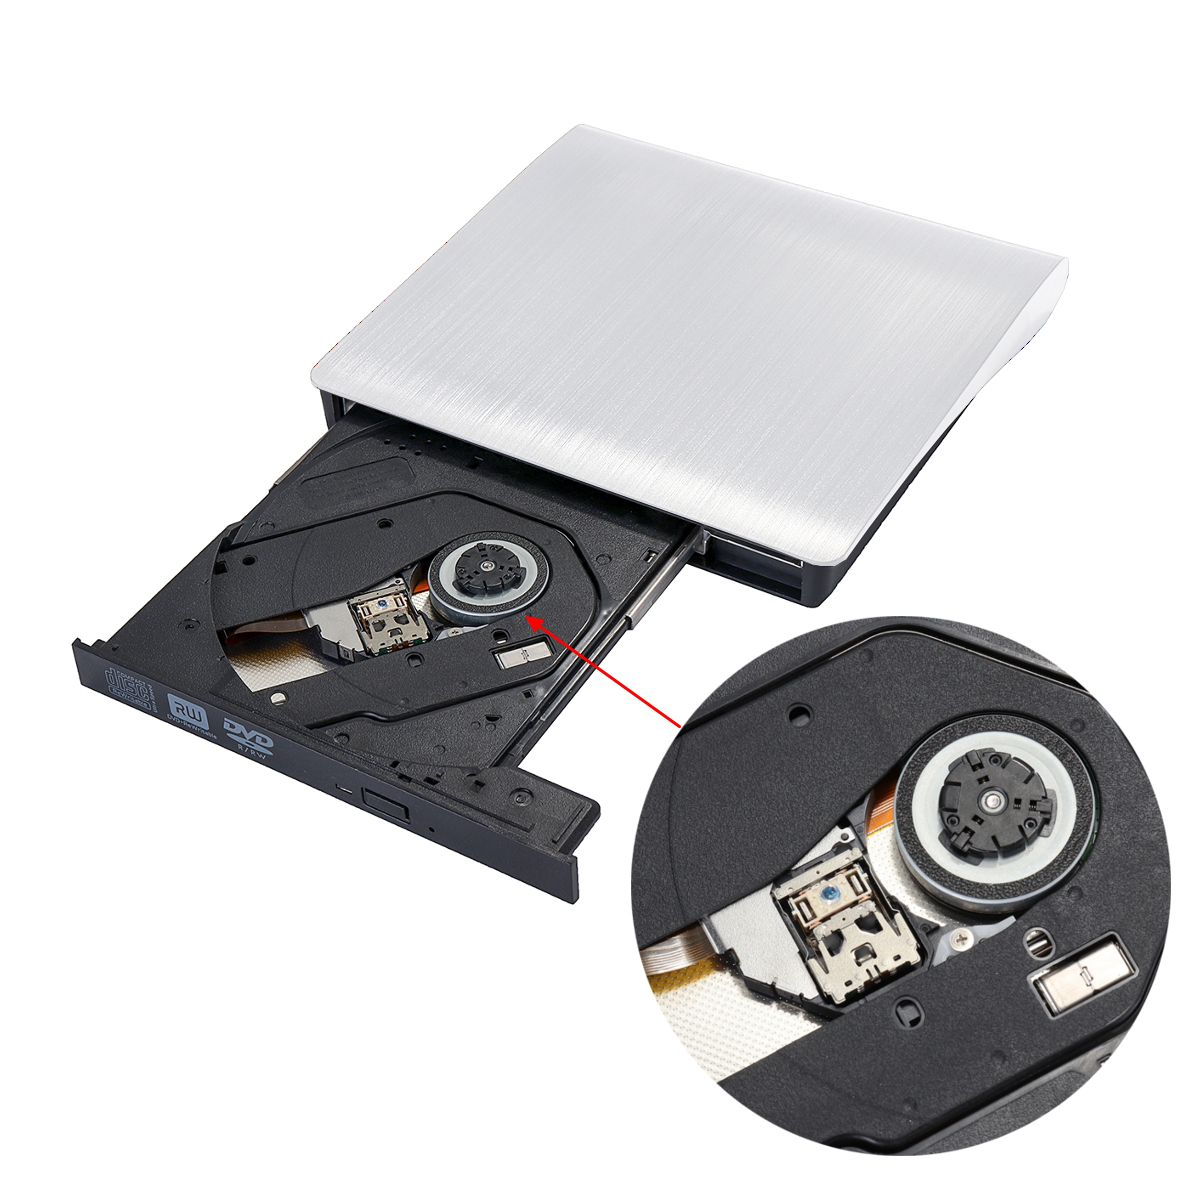 USB 3.0 Slim External DVD Optical Drive DVD-RW CD-RW Combo Drive Burner Reader Player 19